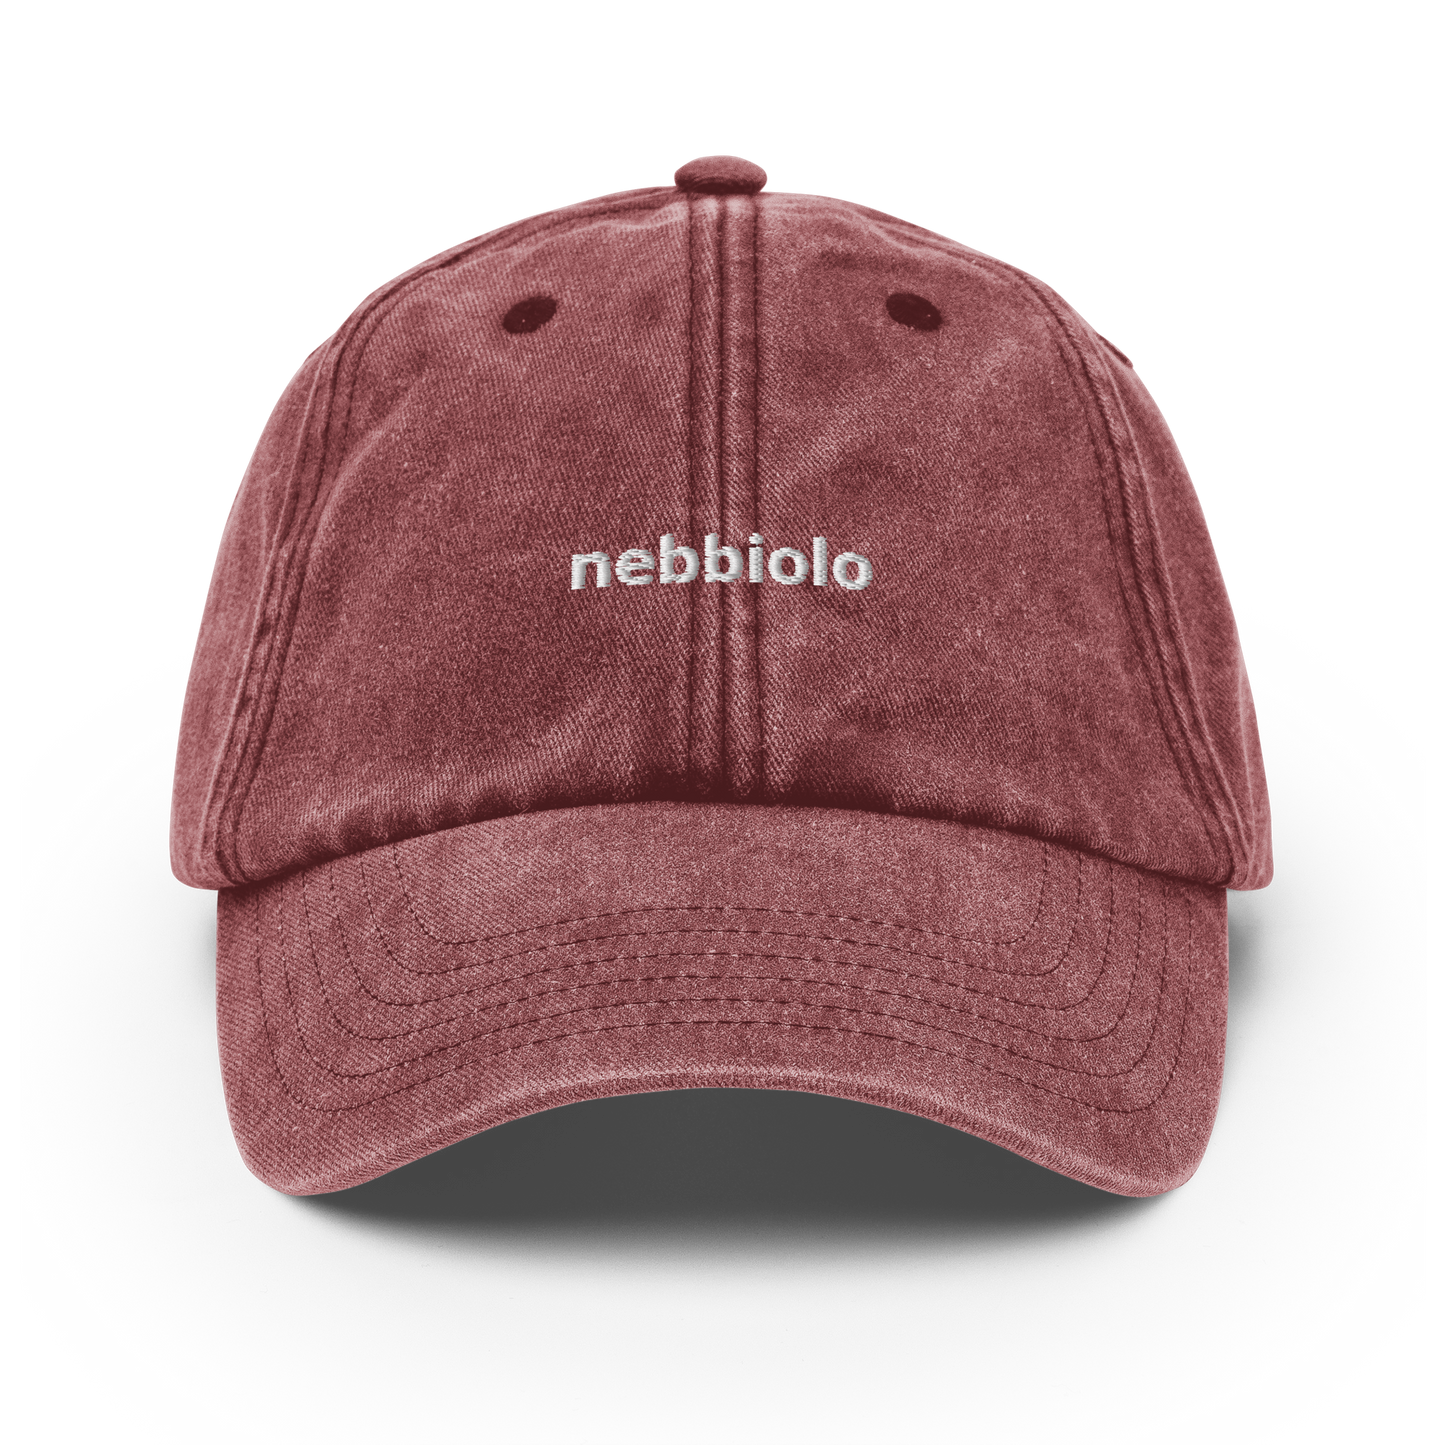 nebbiolo - Vintage Hat